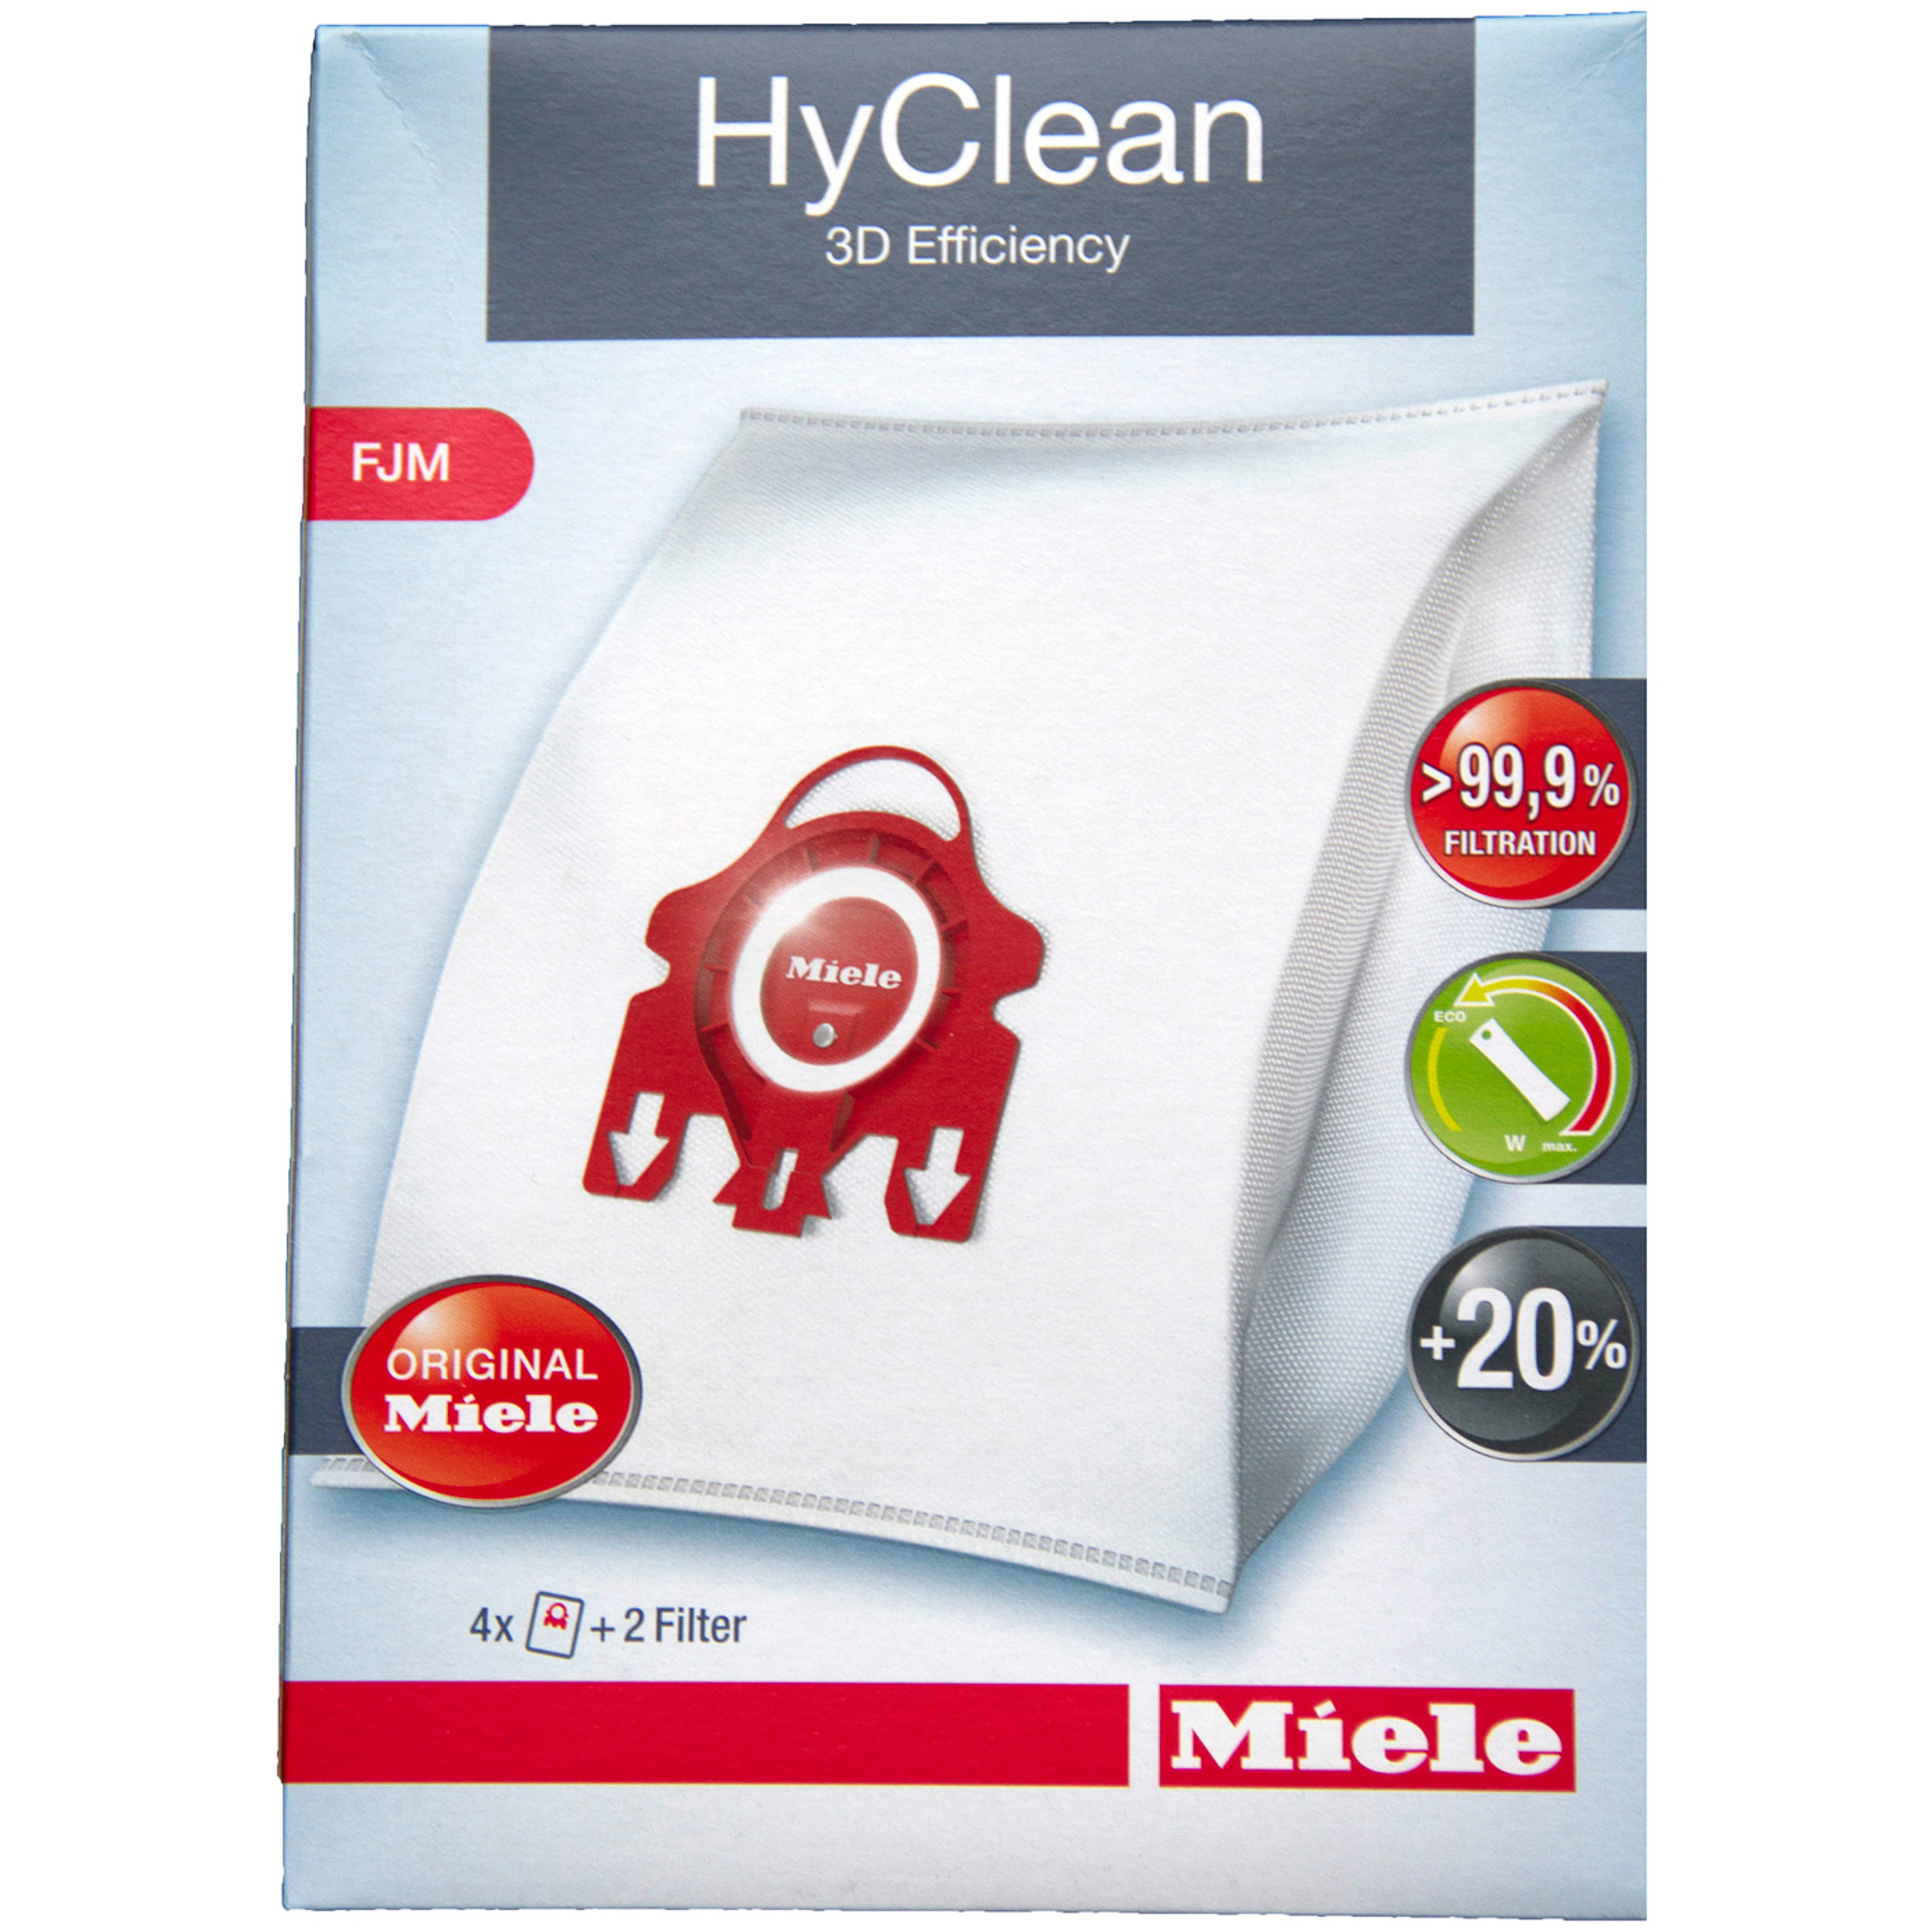 Пылесборник Miele FJM HyClean 3D Efficiency мешки для пылесоса miele gn hyclean 3d пылесборник